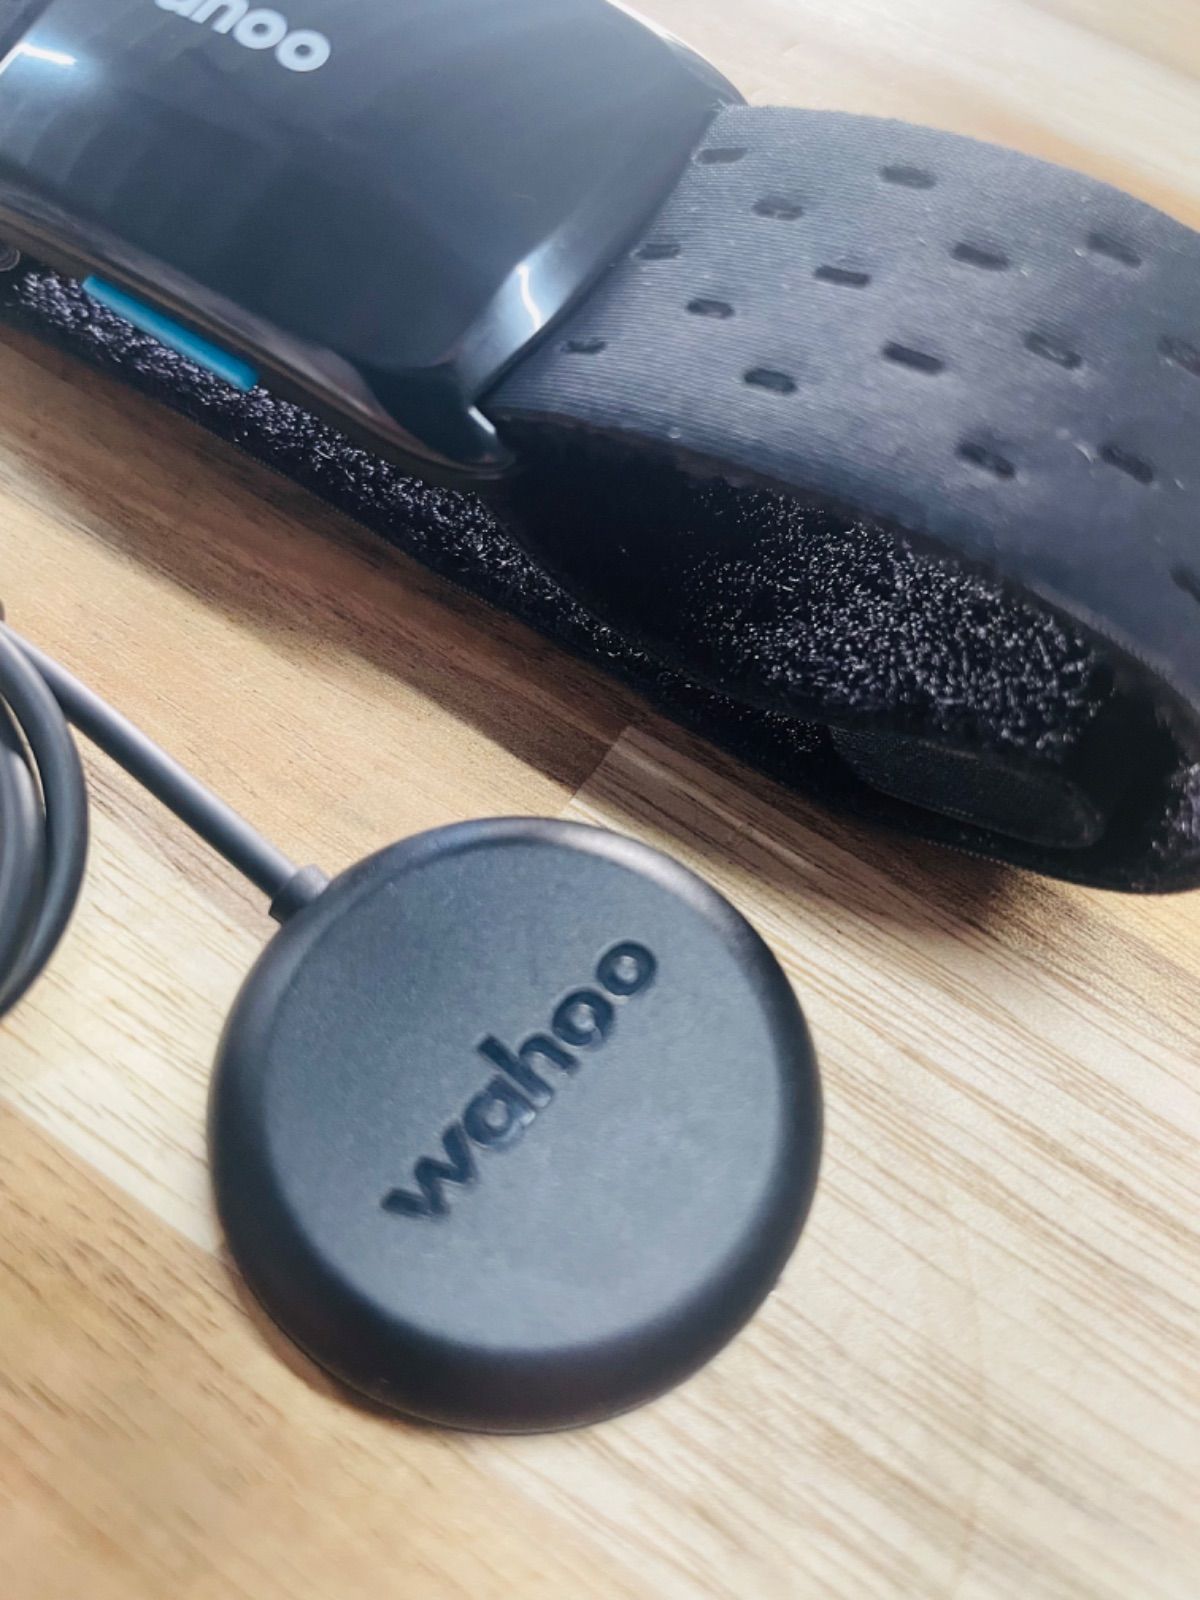 WAHOO TICKER FIT ティッカーフィット WF124 腕用心拍計 ANT+ USB充電